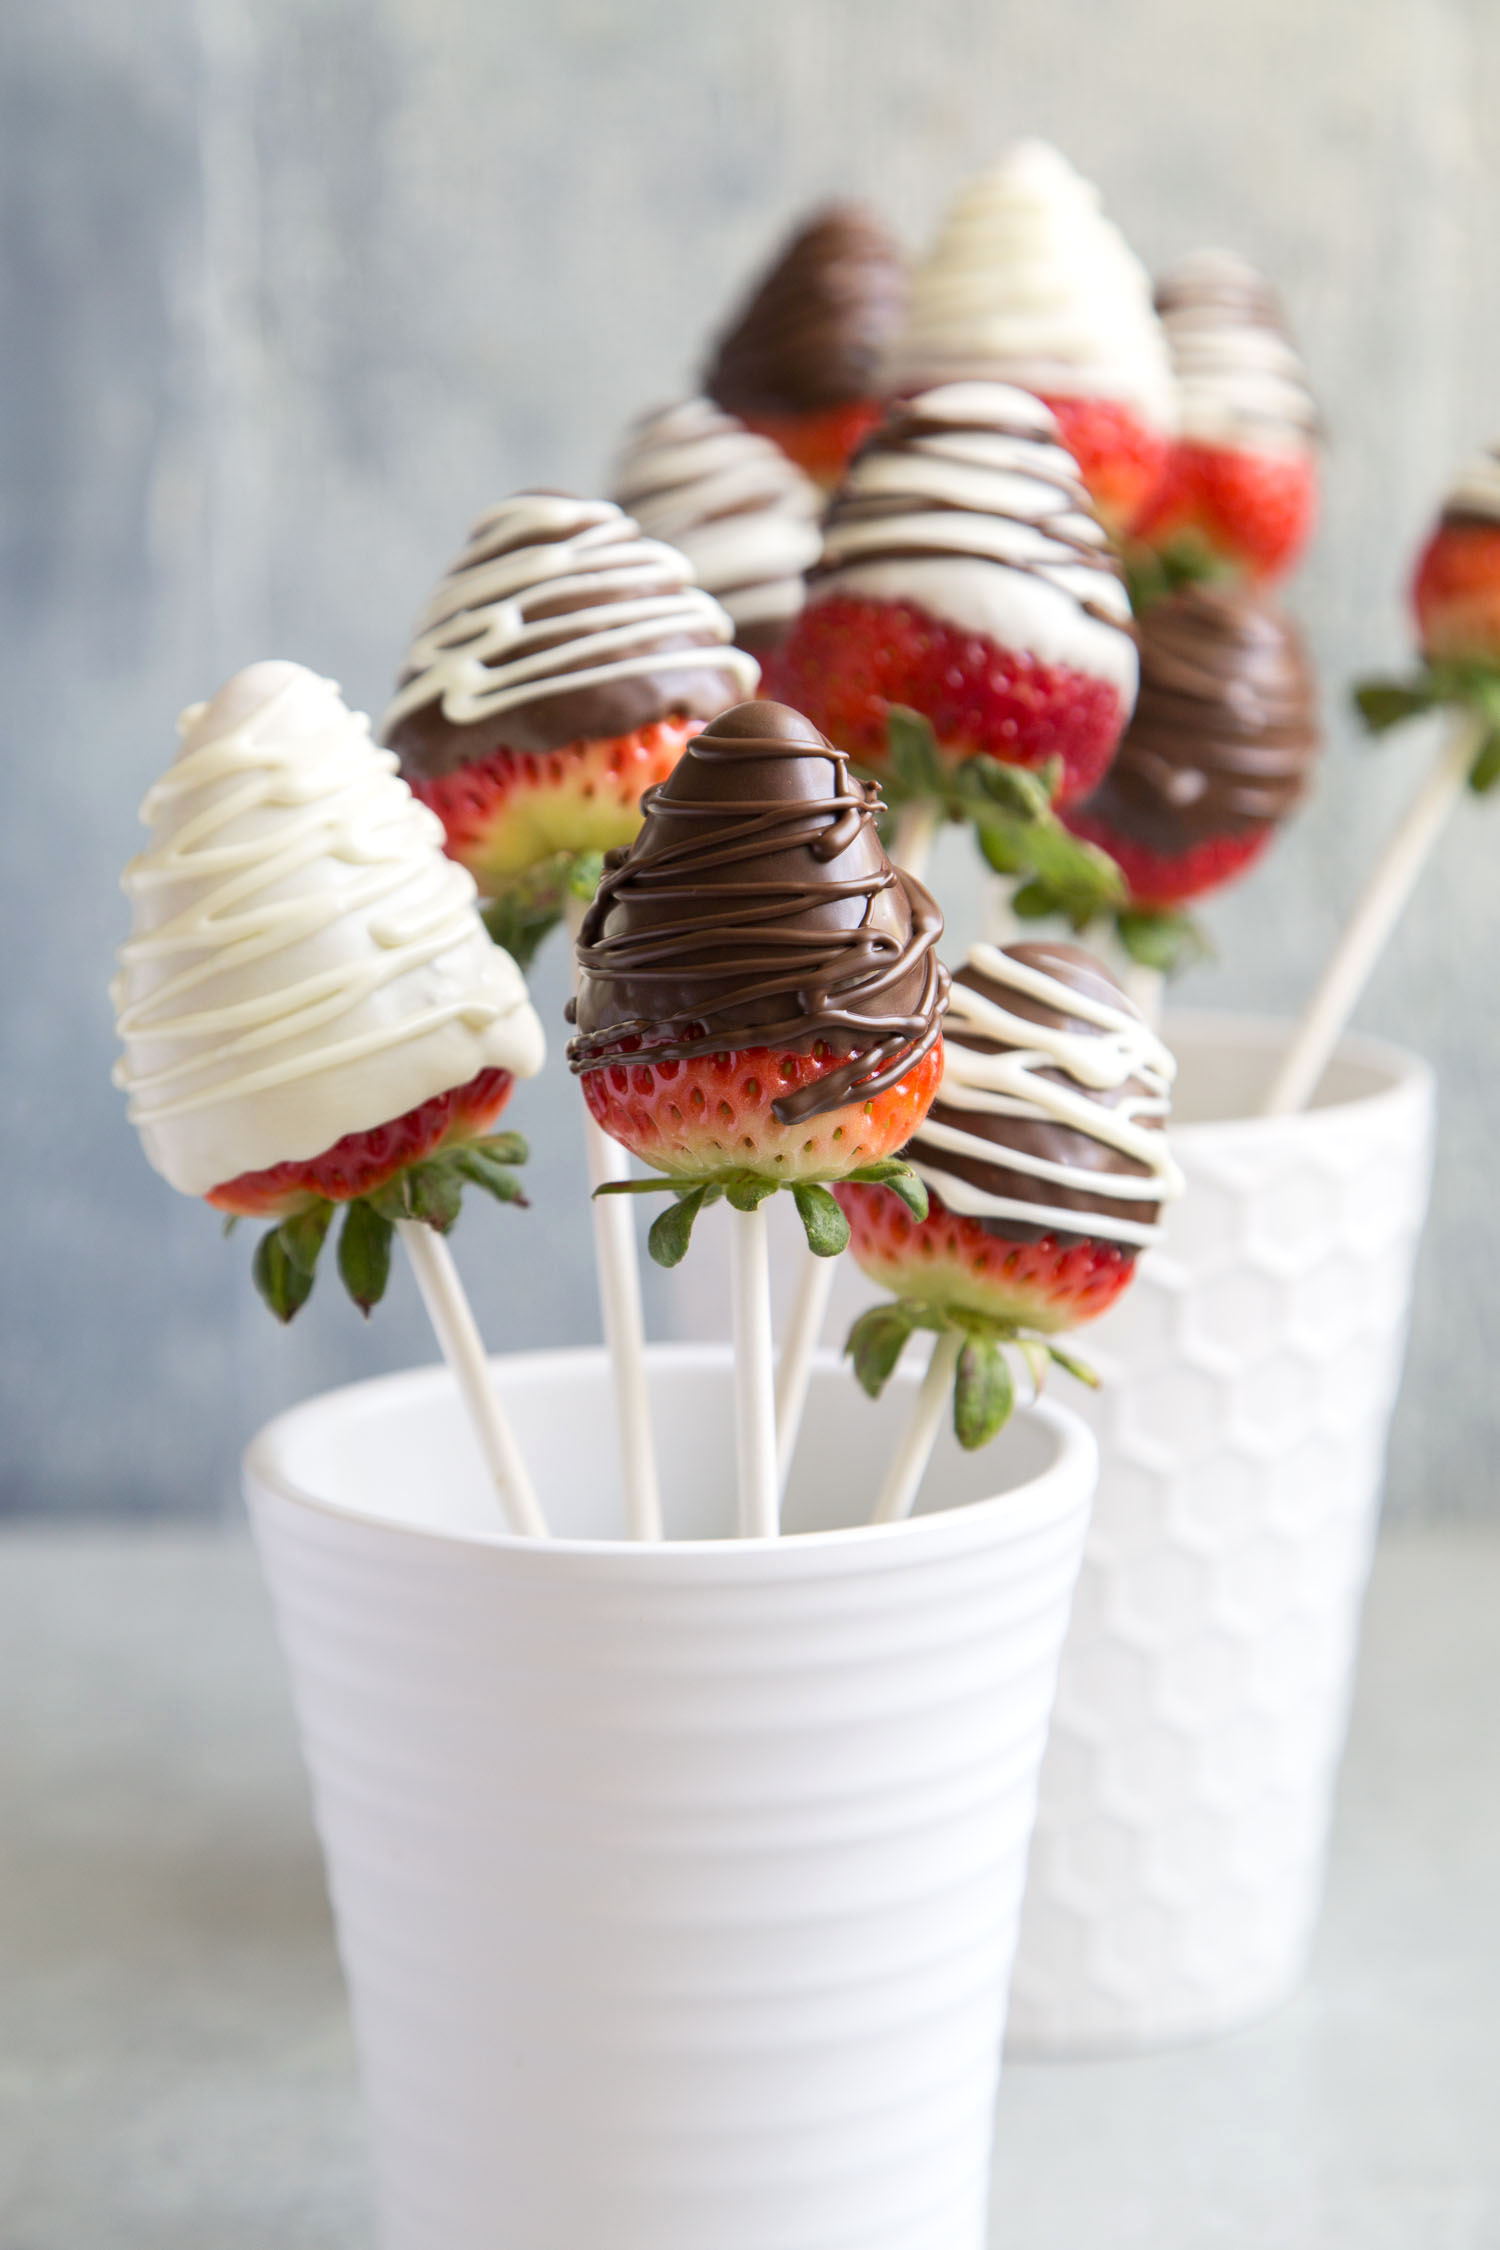 Chocolate Strawberry Bouquet - The Little Epicurean